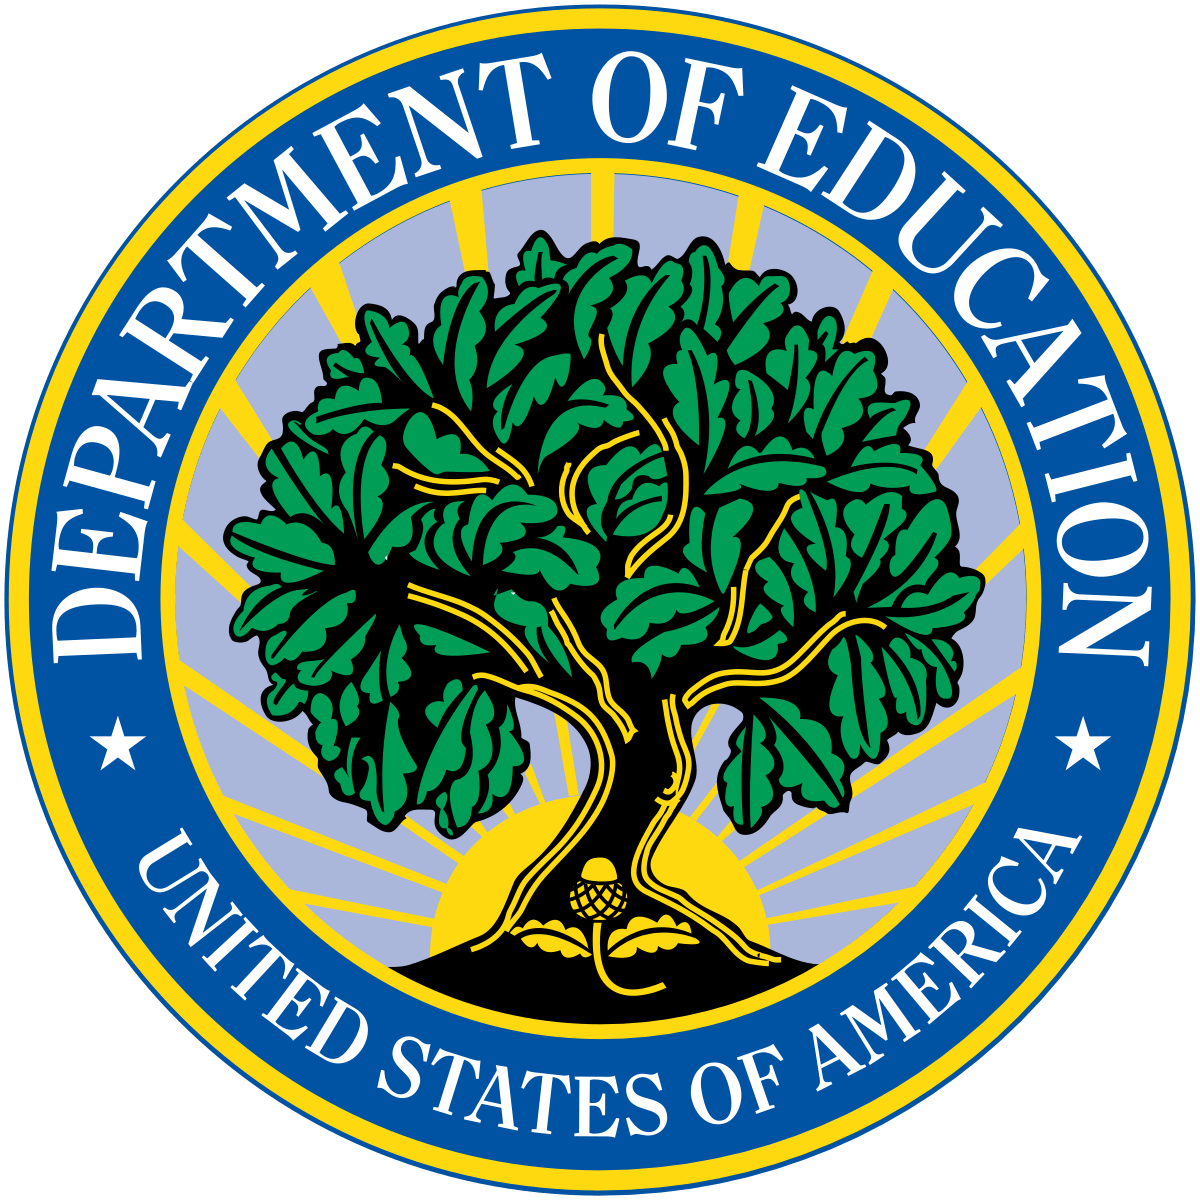 Us Department of Education Logo - United States Department of Education